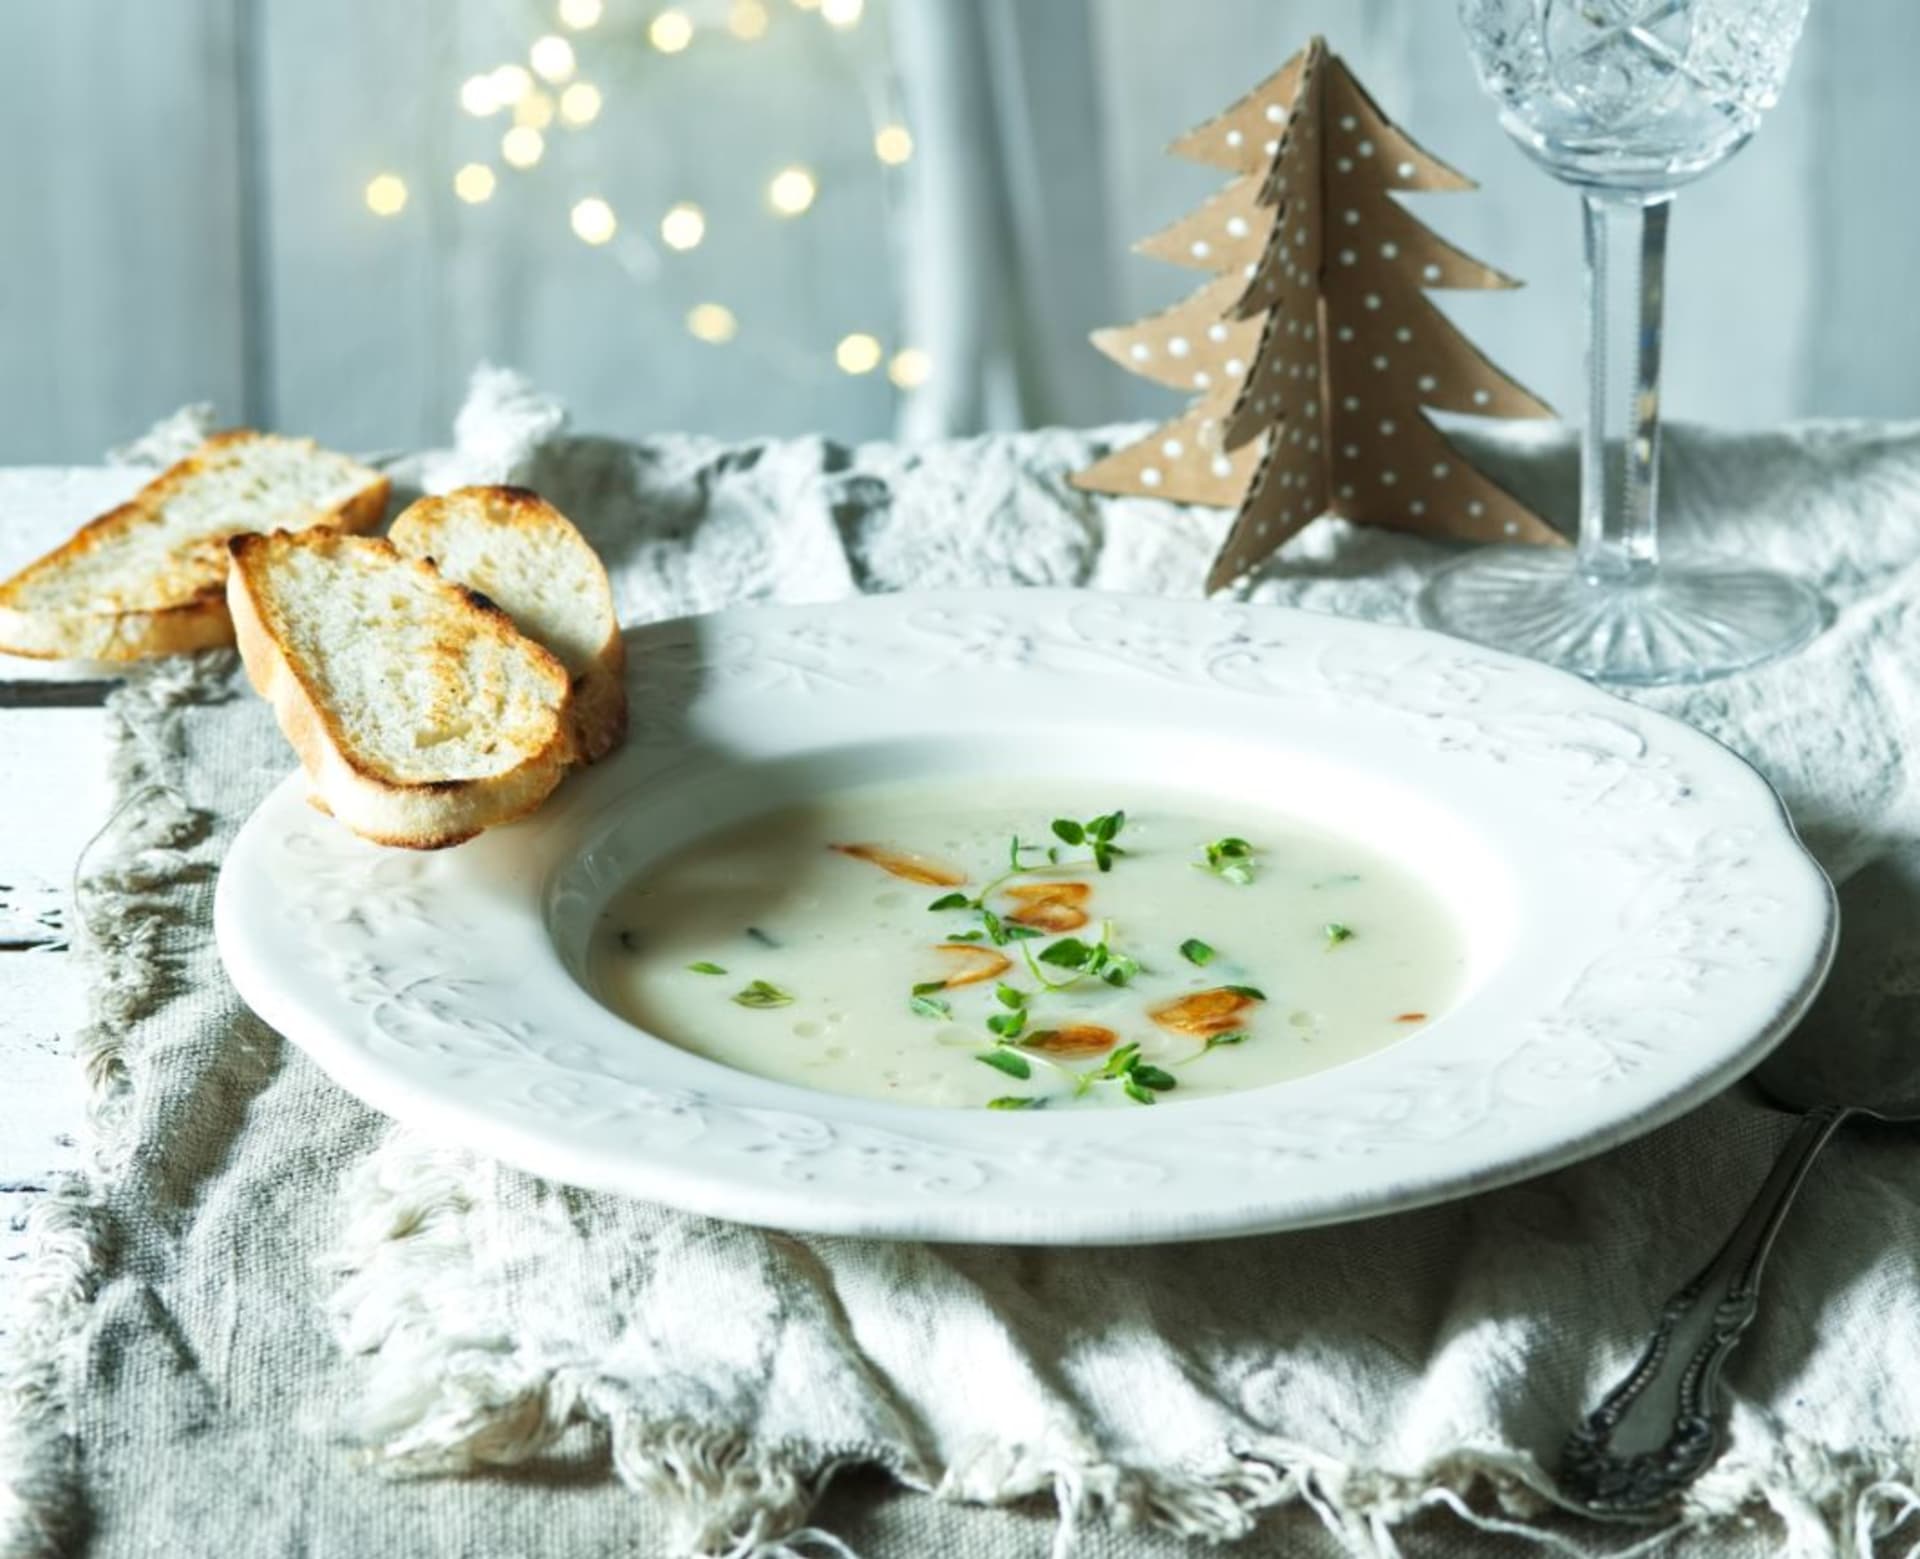 Treasures of French cuisine: festive garlic cream with toast